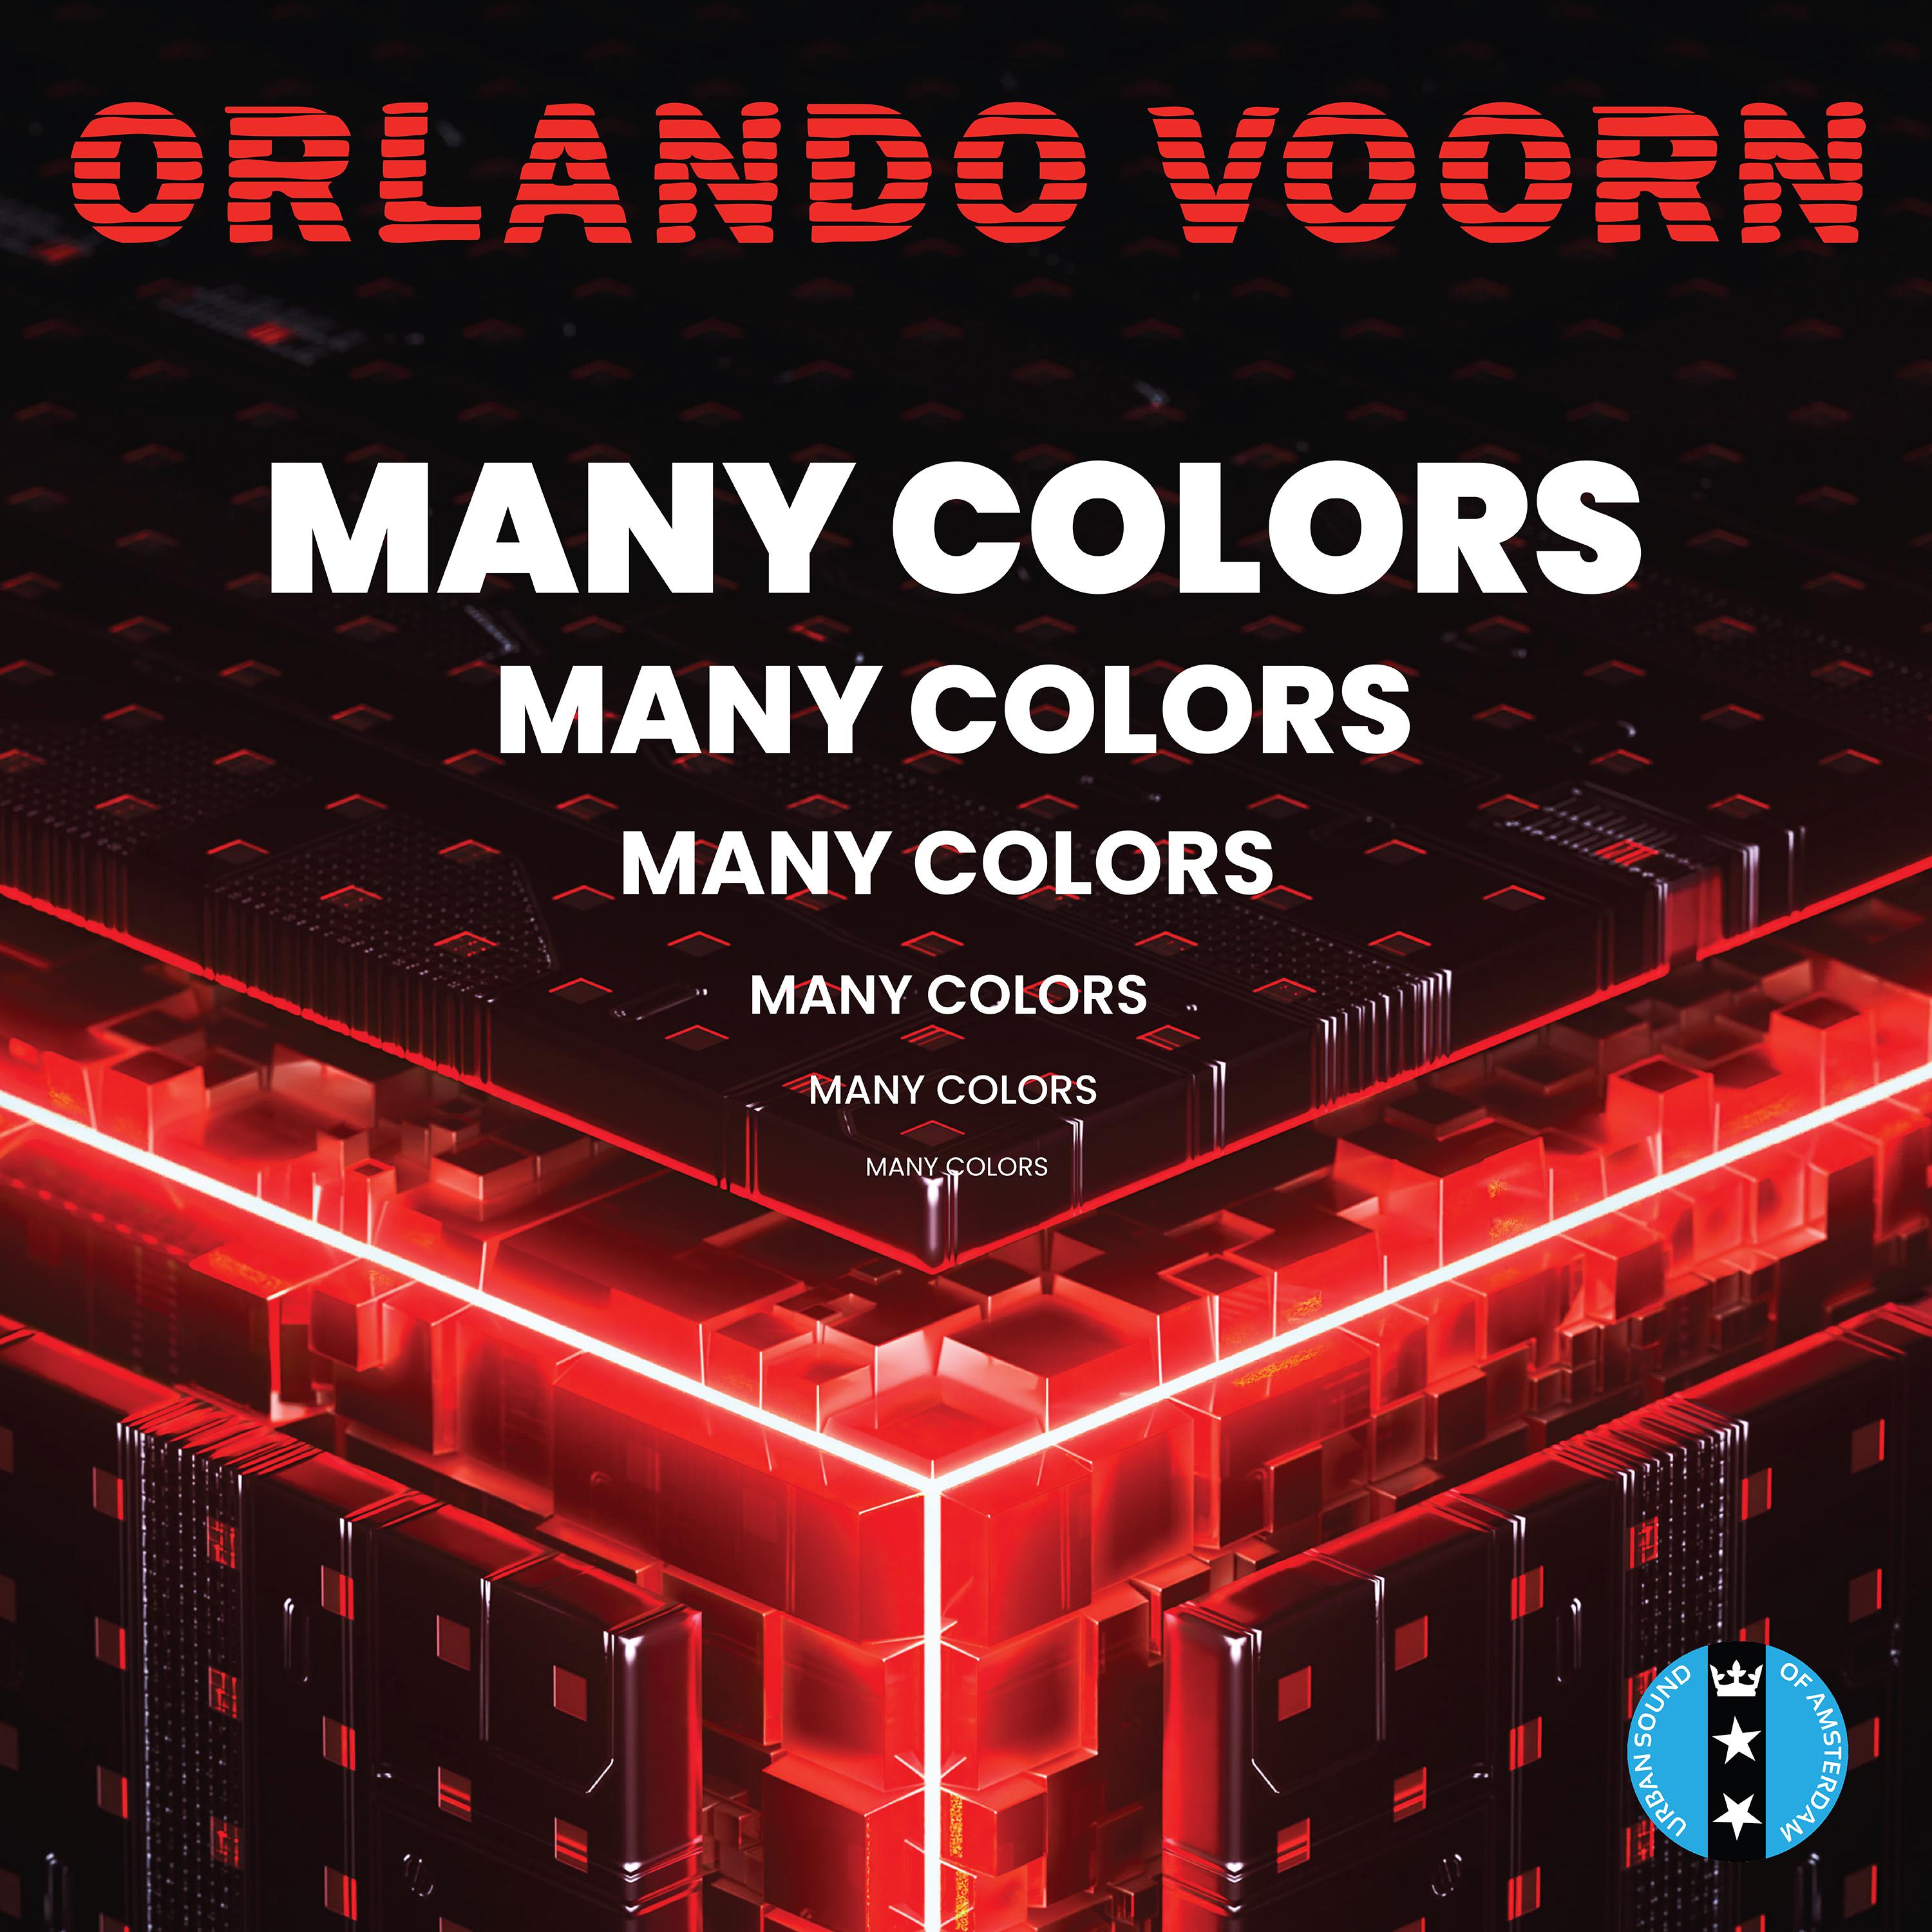 Orlando Voorn - Many Colors (Original Mix)